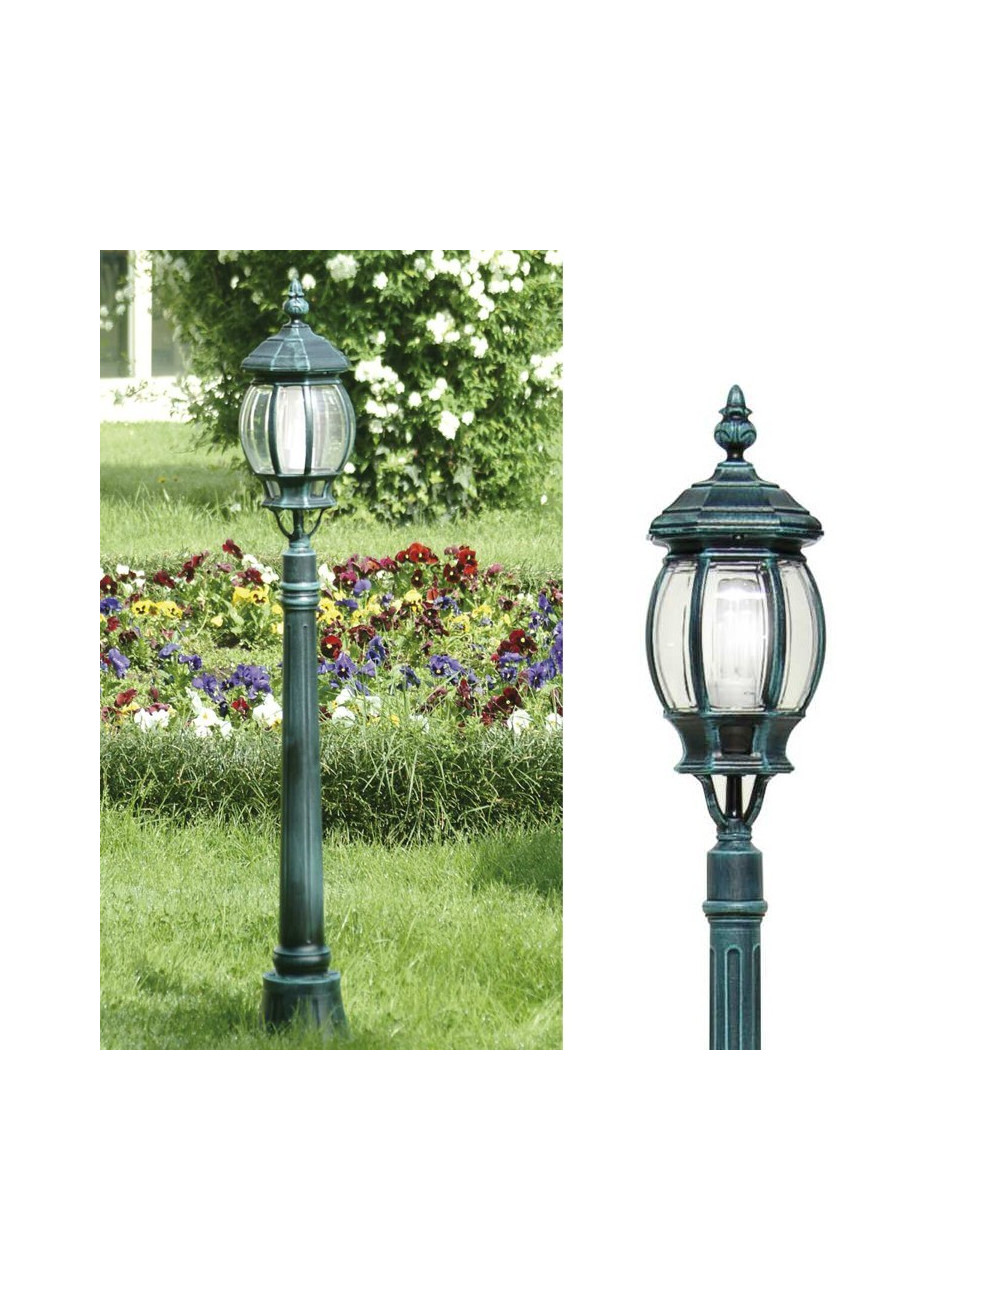 ENEA Palo Lampioncino Classic Lamp Outdoor Garden Lighting